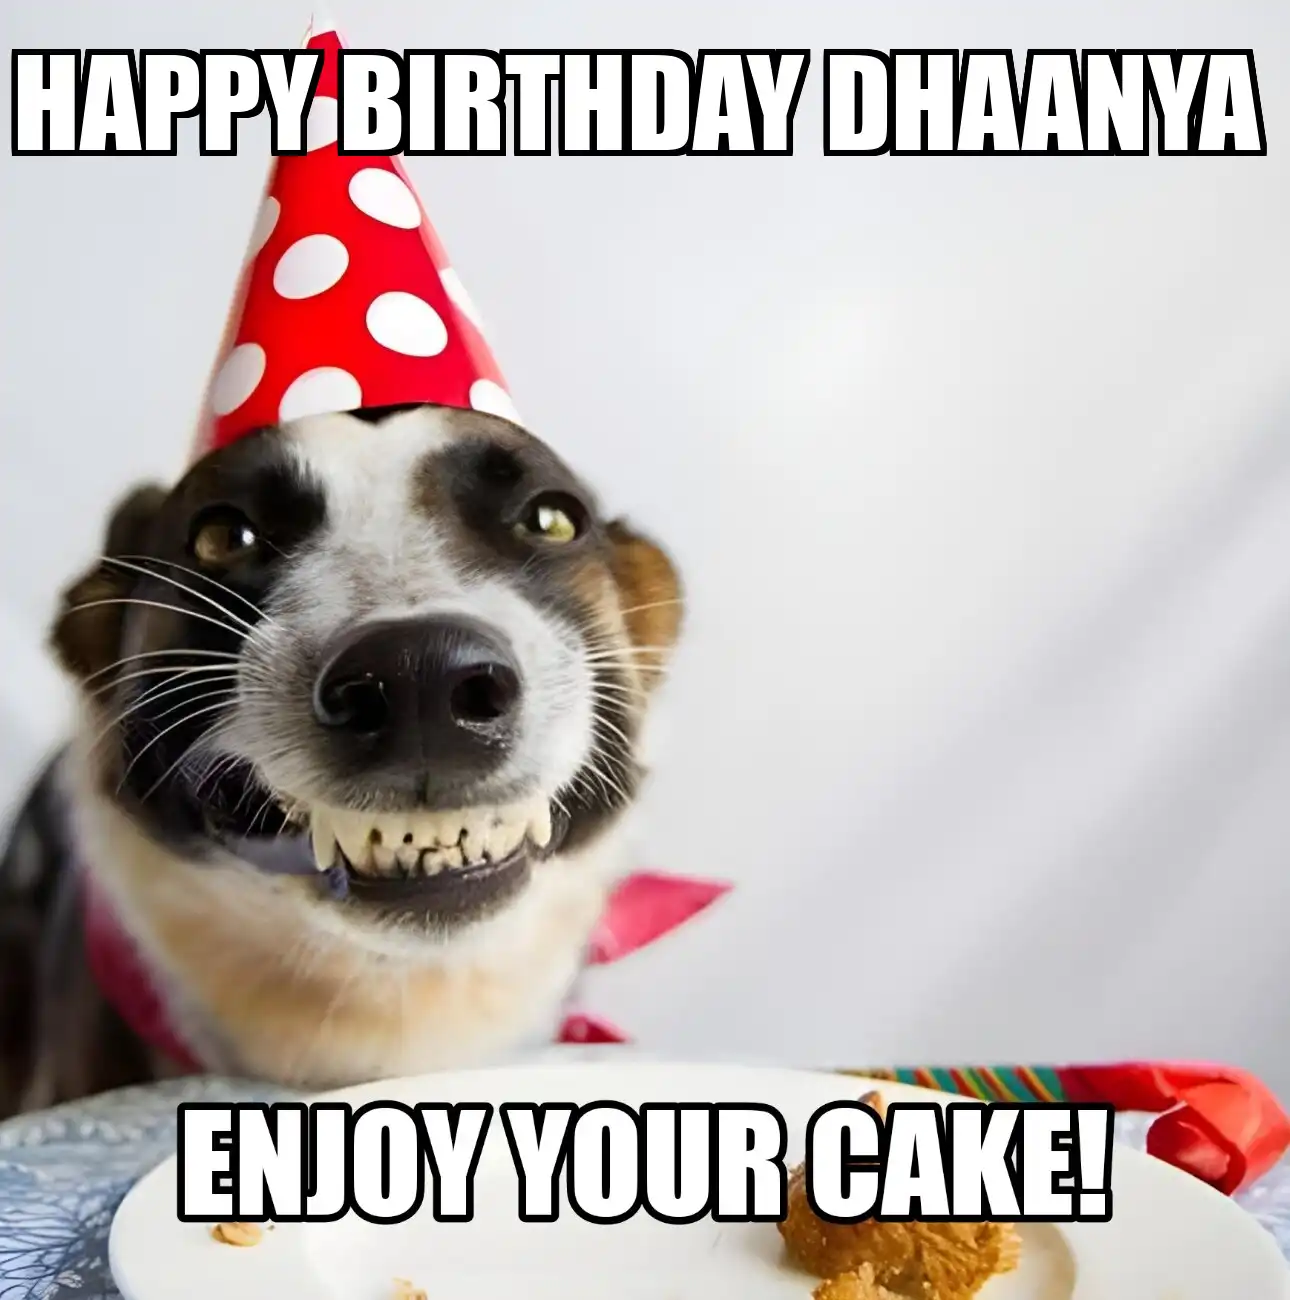 Happy Birthday Dhaanya Enjoy Your Cake Dog Meme